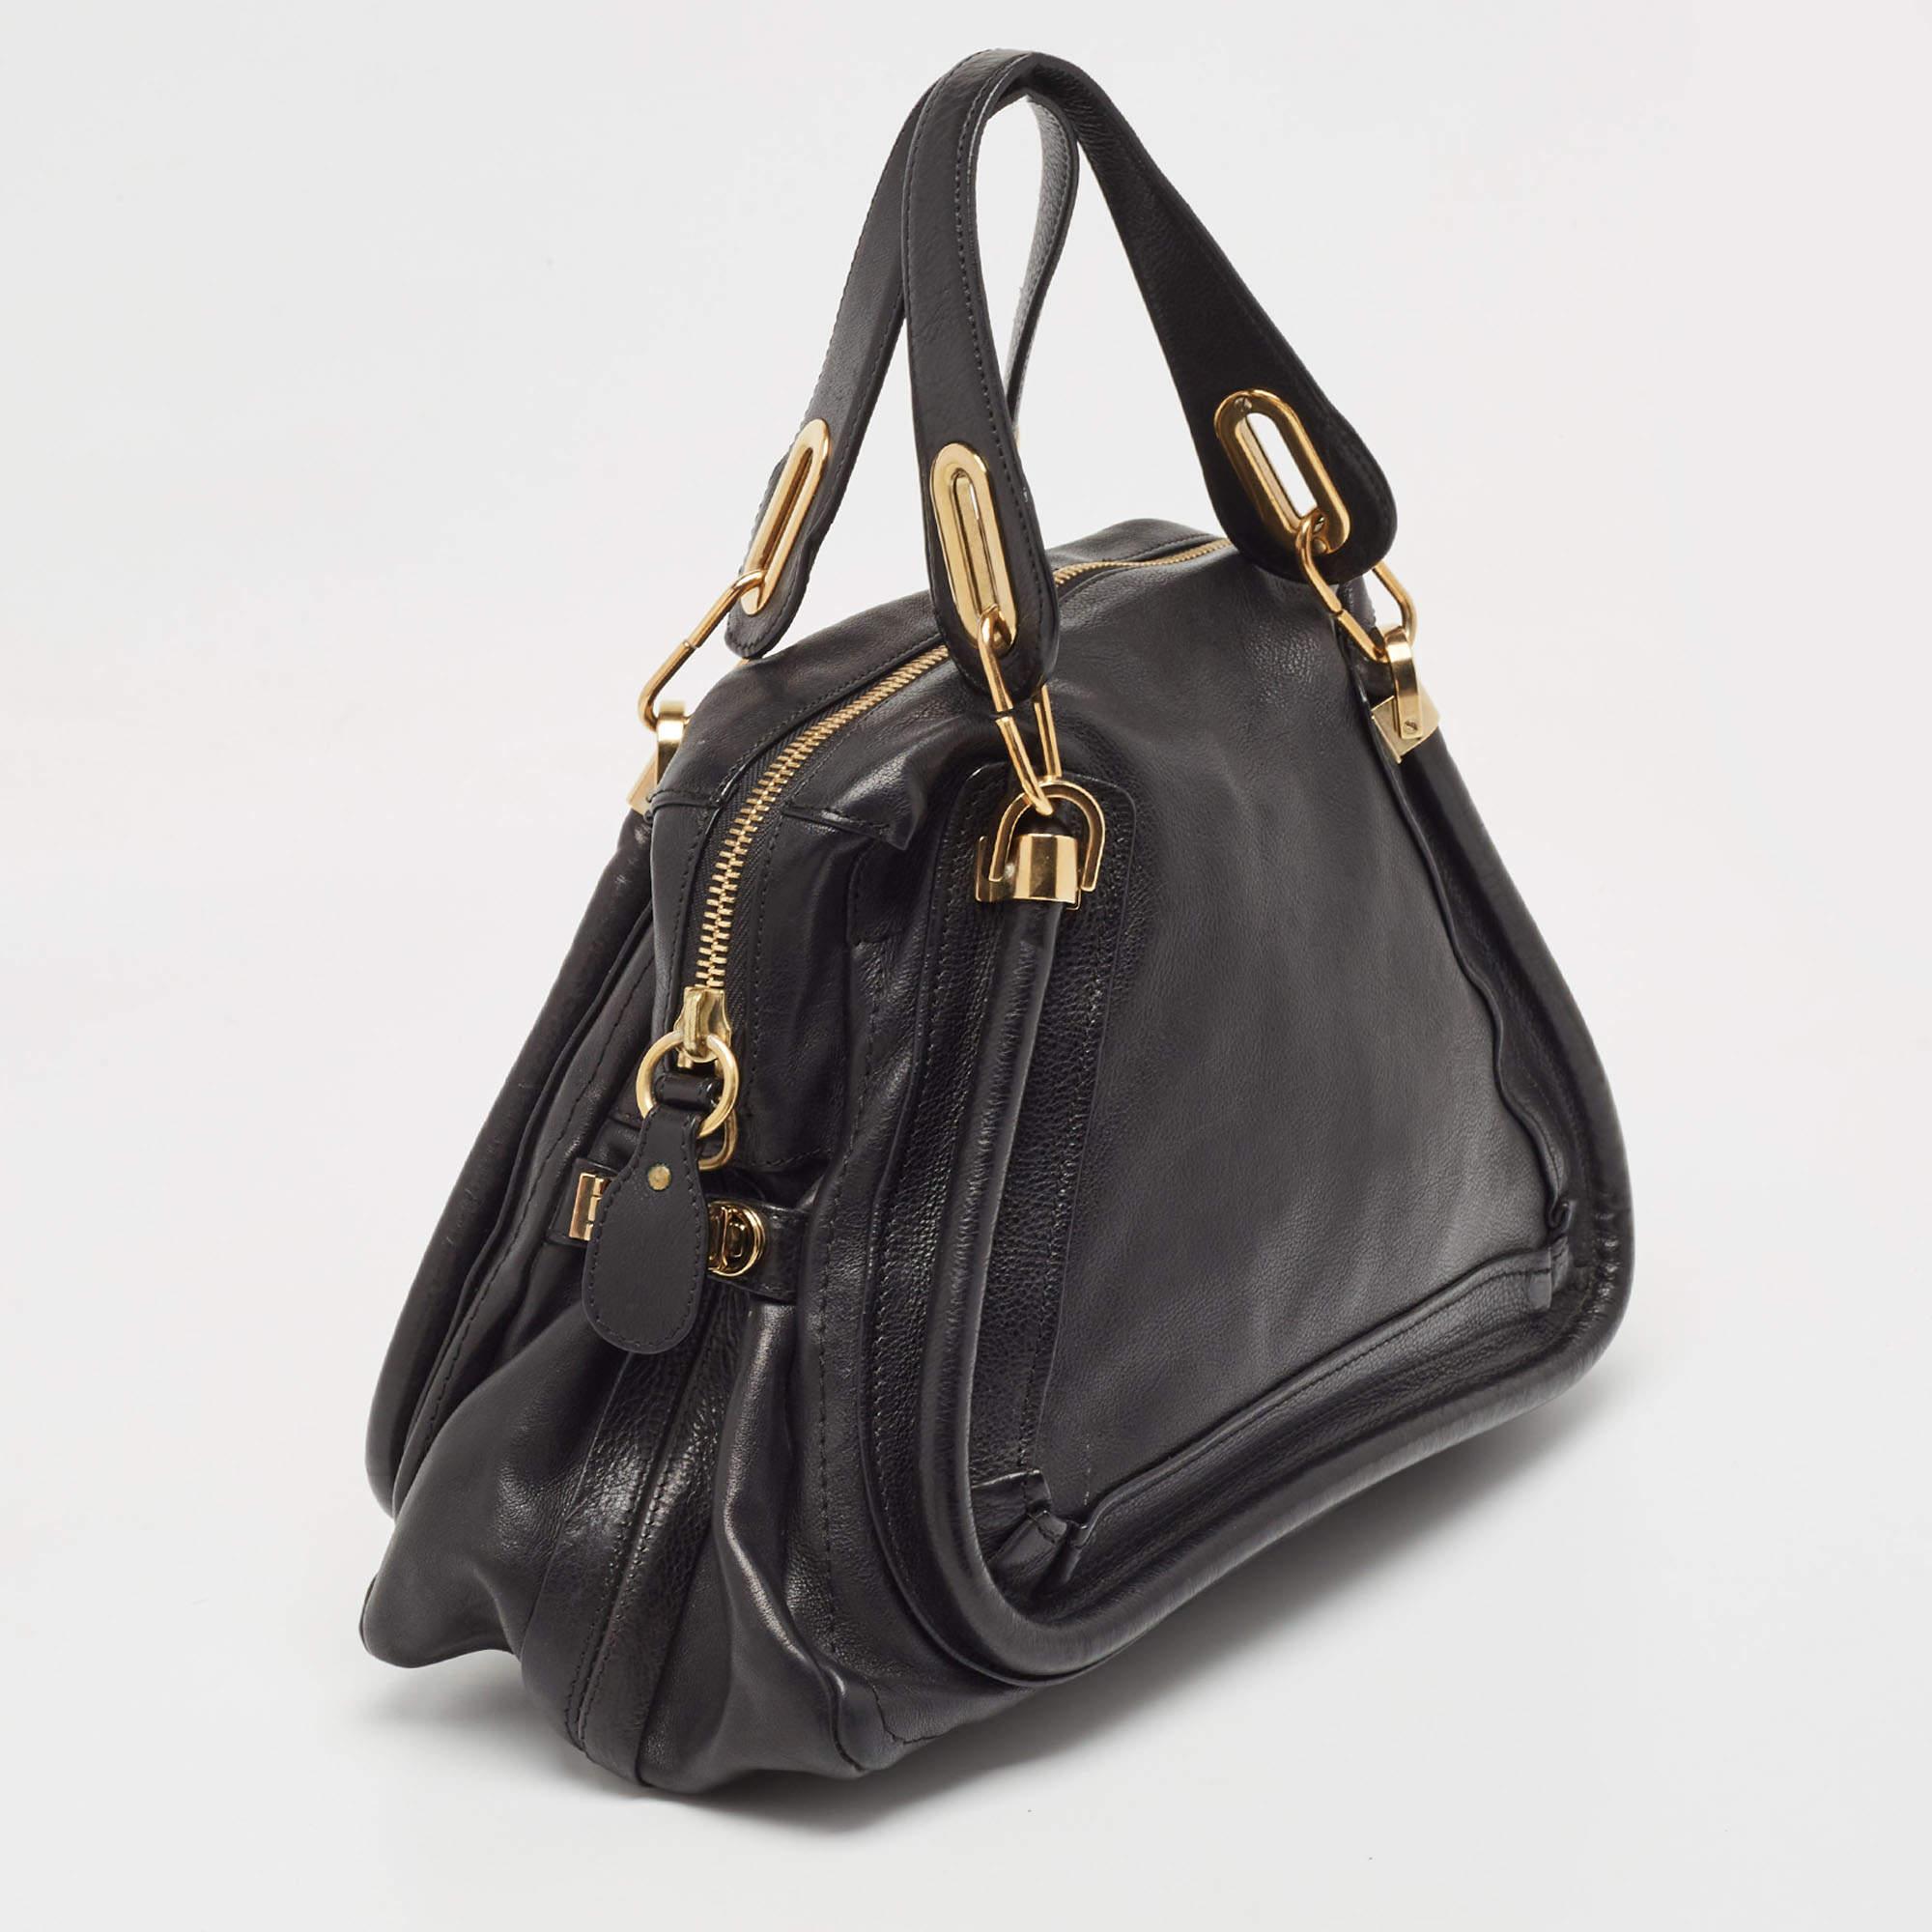 Chloe Black Leather Medium Paraty Satchel In Good Condition For Sale In Dubai, Al Qouz 2